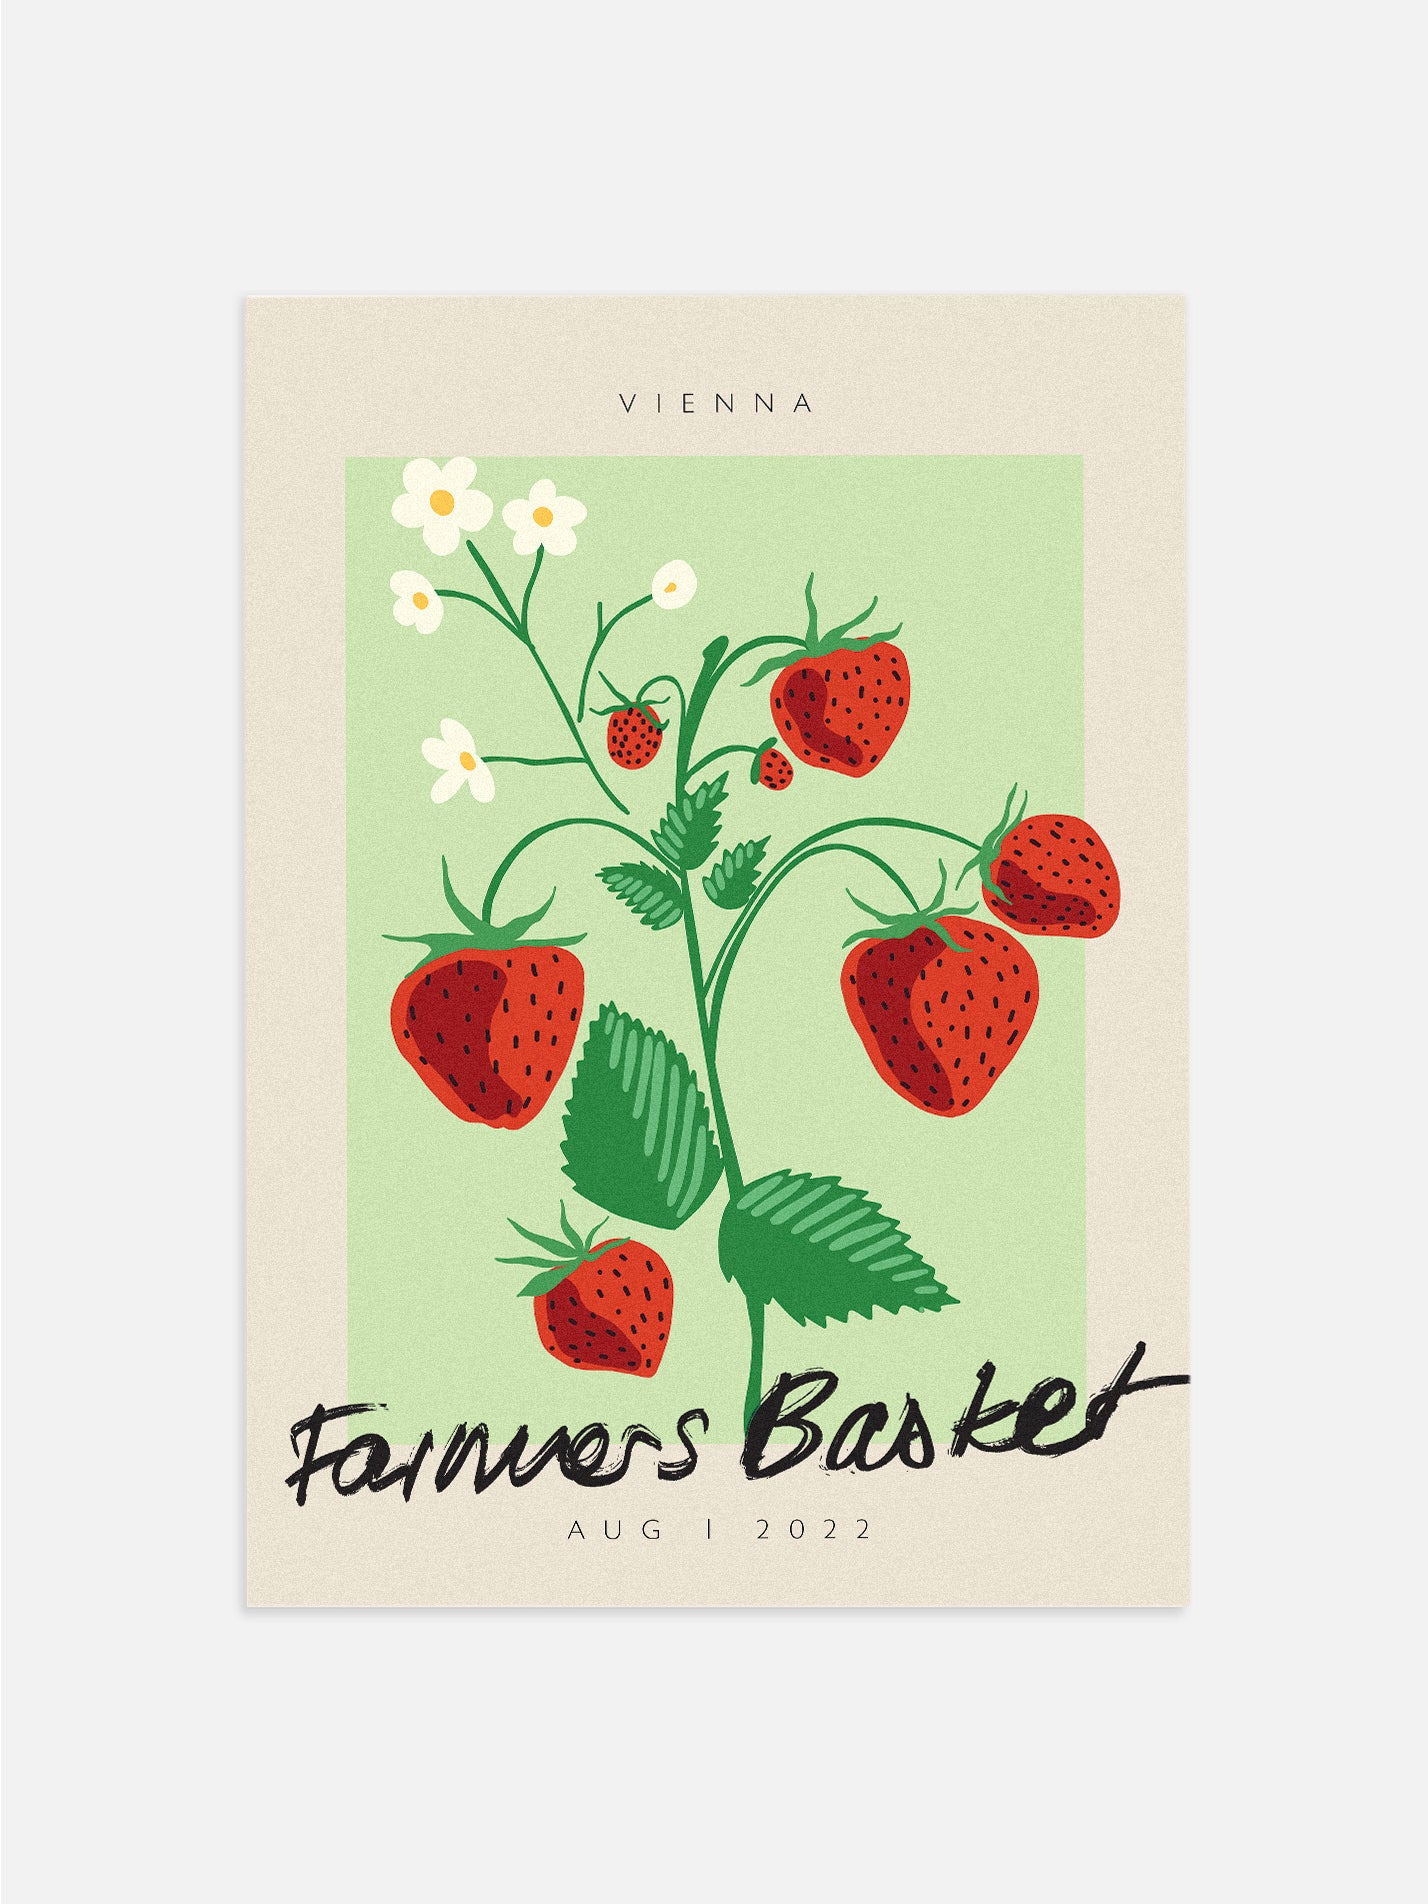 Vienna Farmer’s Basket